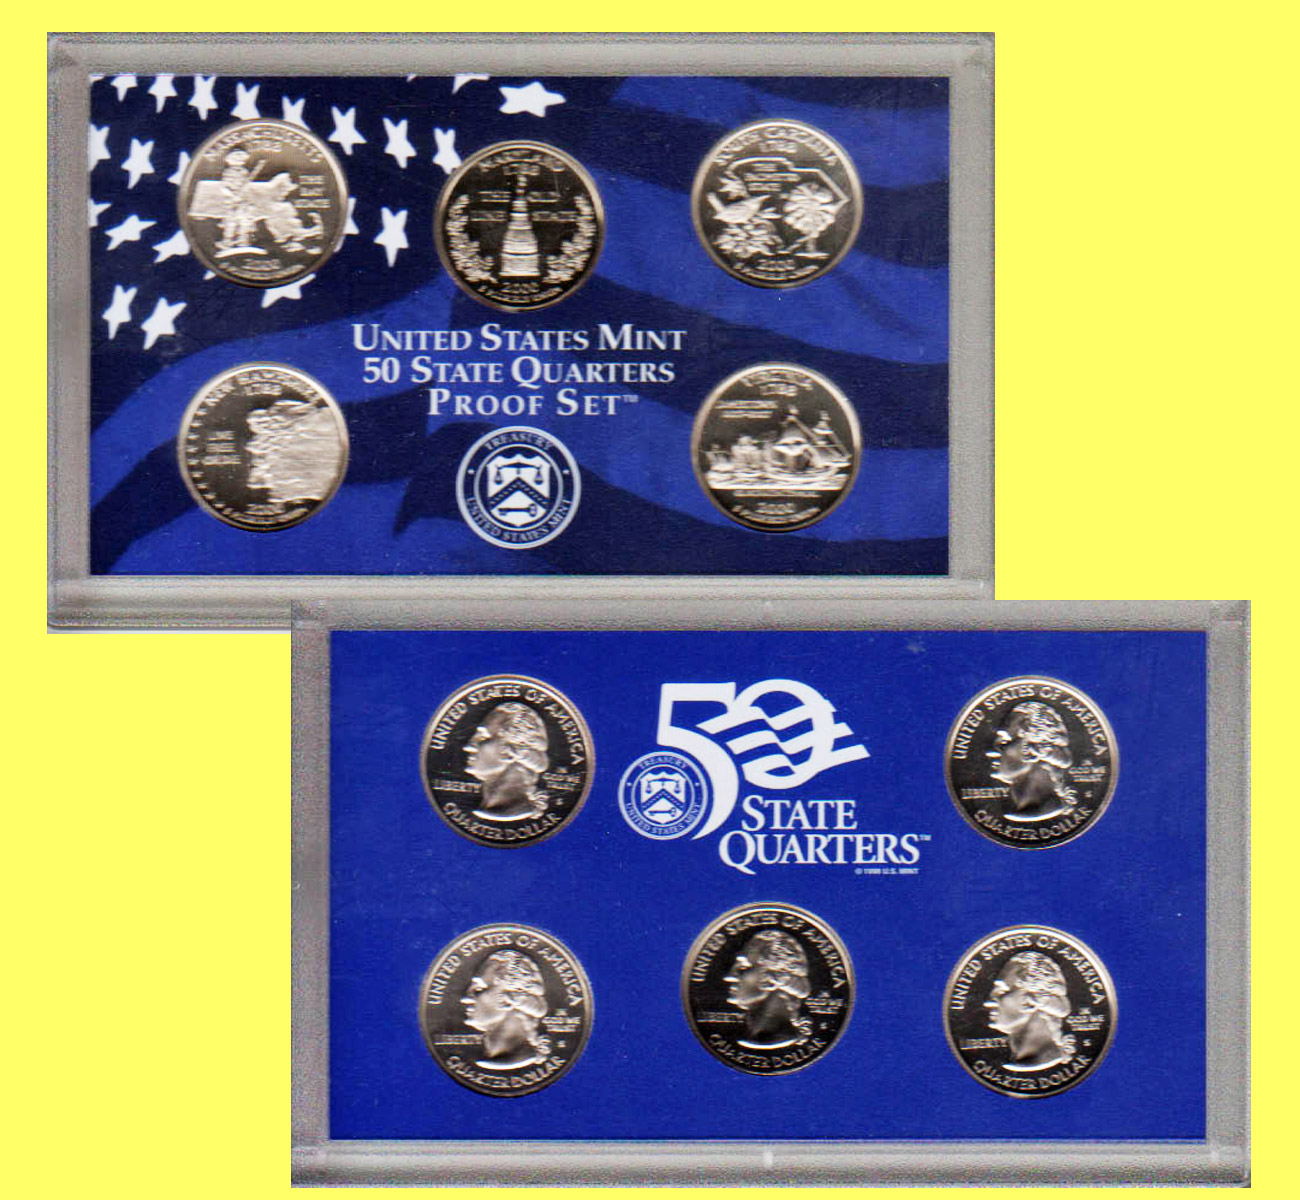  USA United States Mint 50 State Quarters Proof Set 2000   